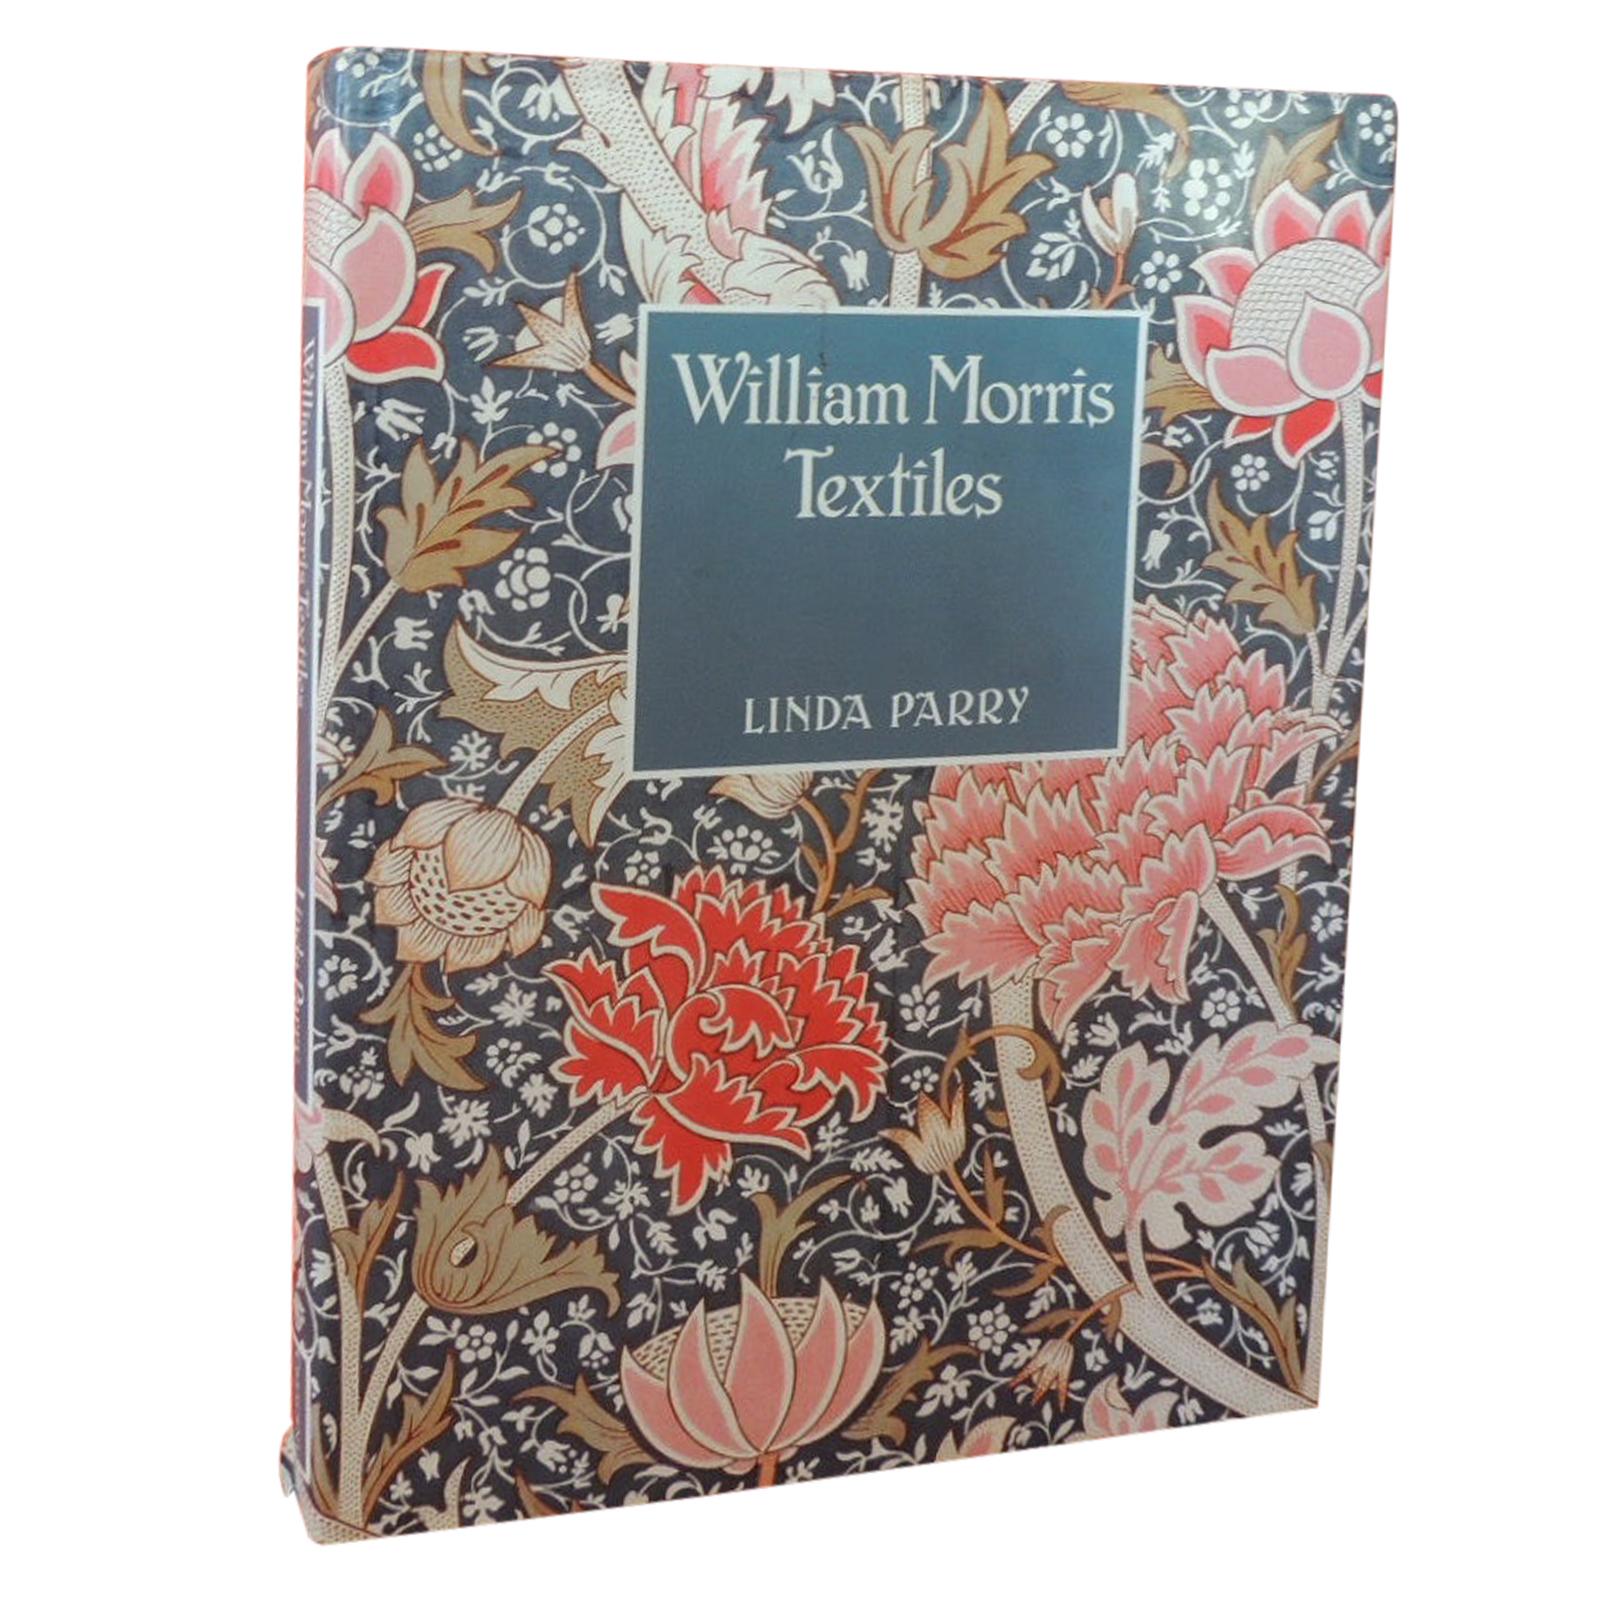 William Morris Textiles Vintage Hard-Cover Decorative Book by Linda Parry